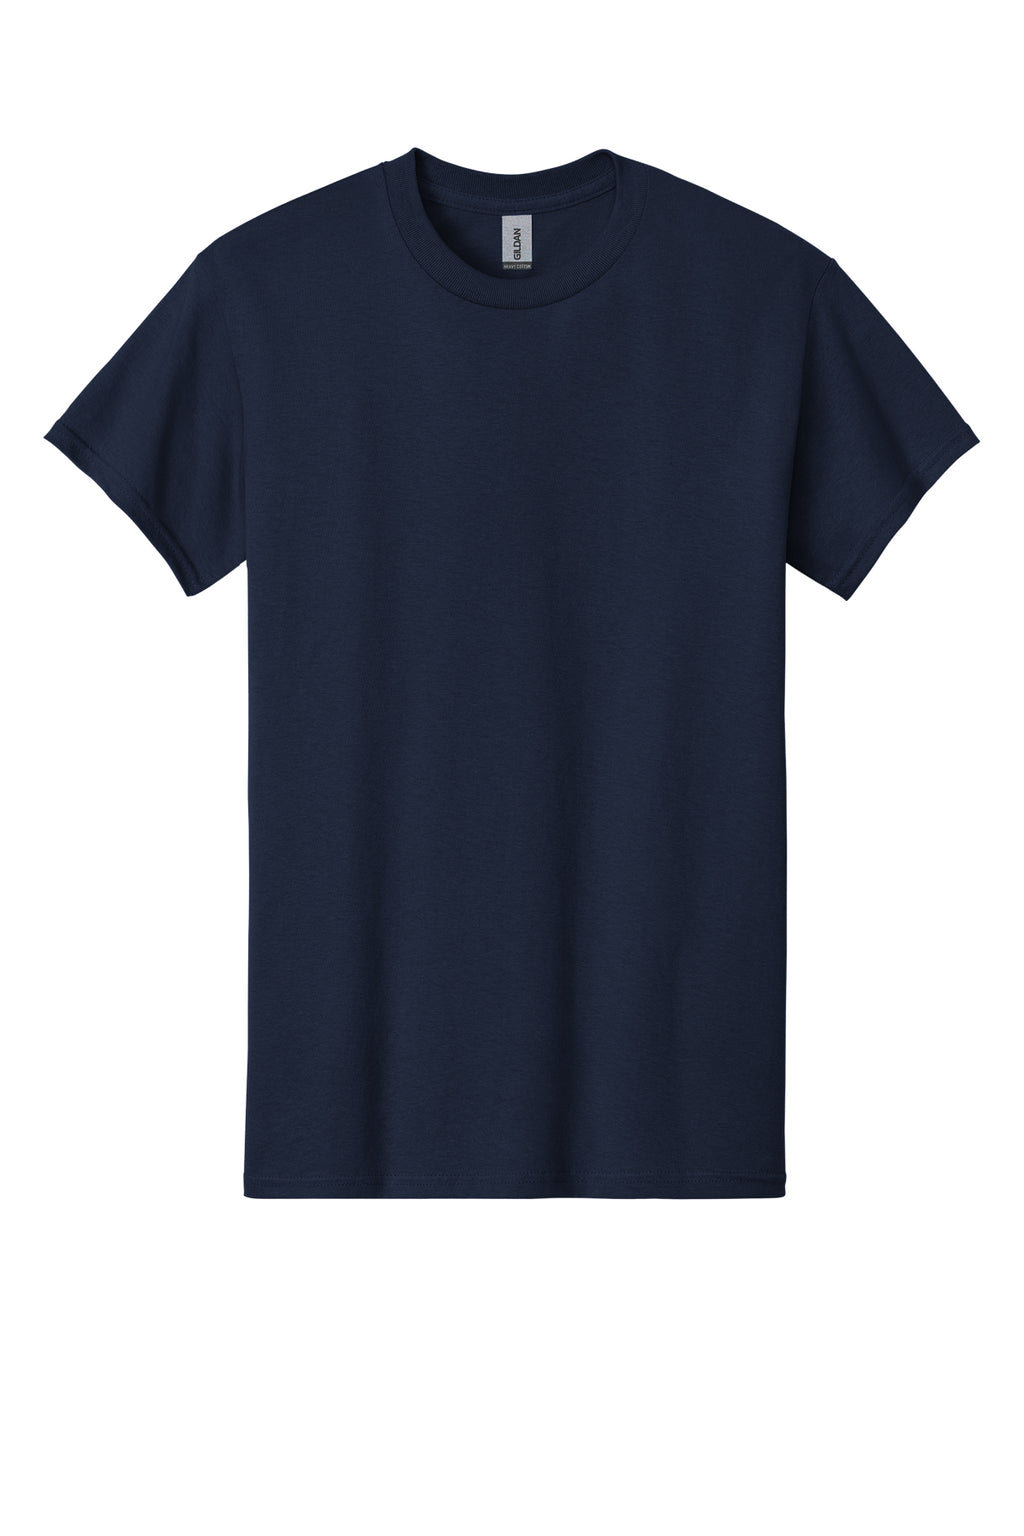 Gildan Mens/Unisex S/S Shirts Navy